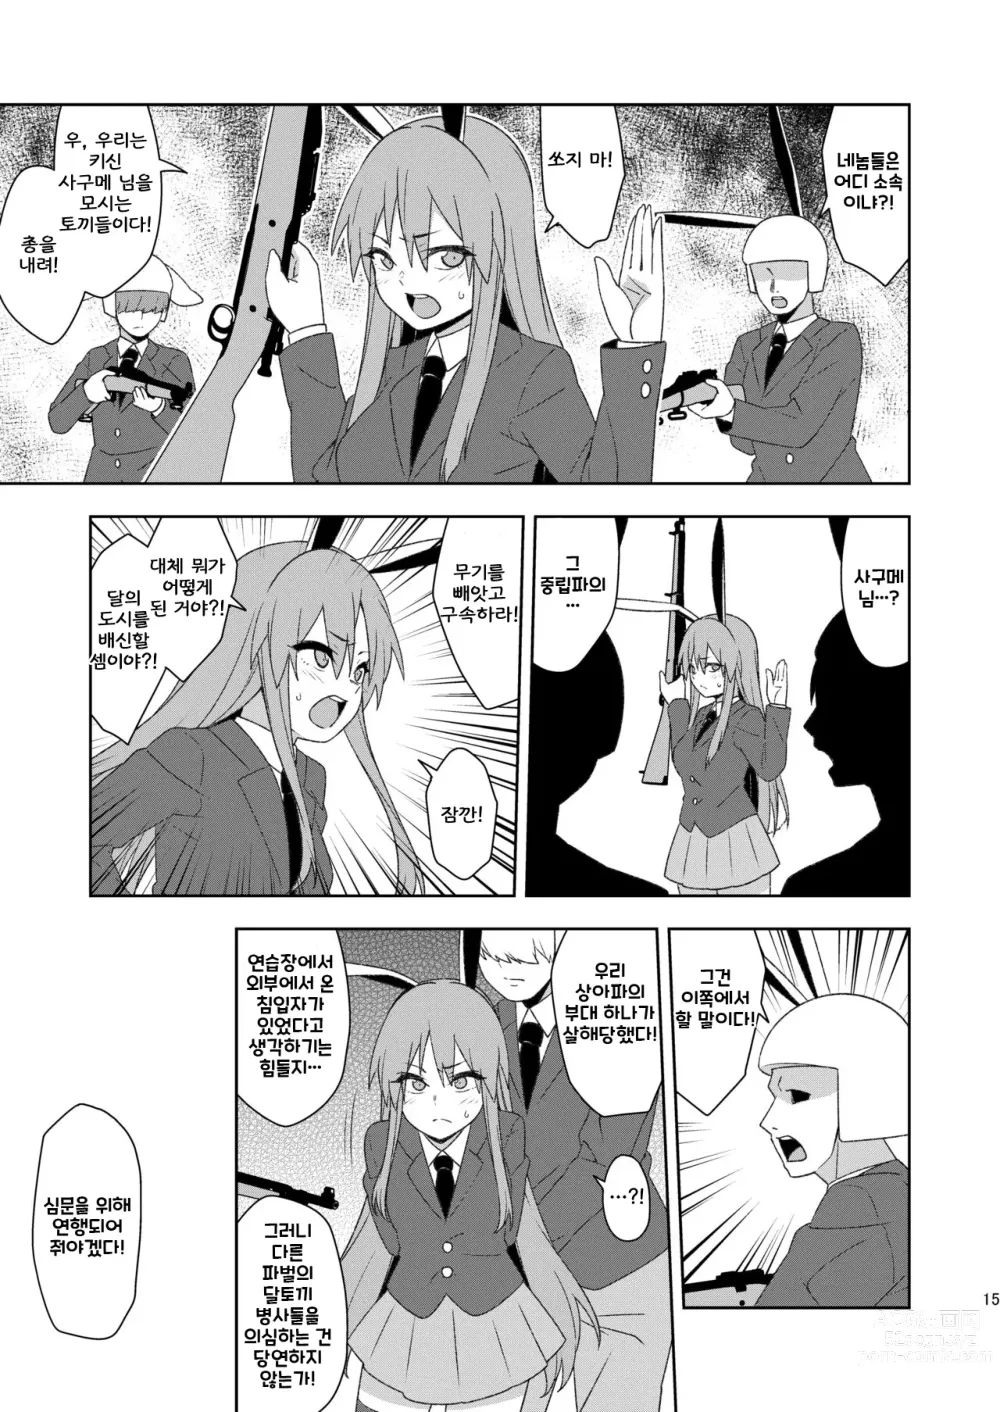 Page 15 of doujinshi 전화의 달토끼